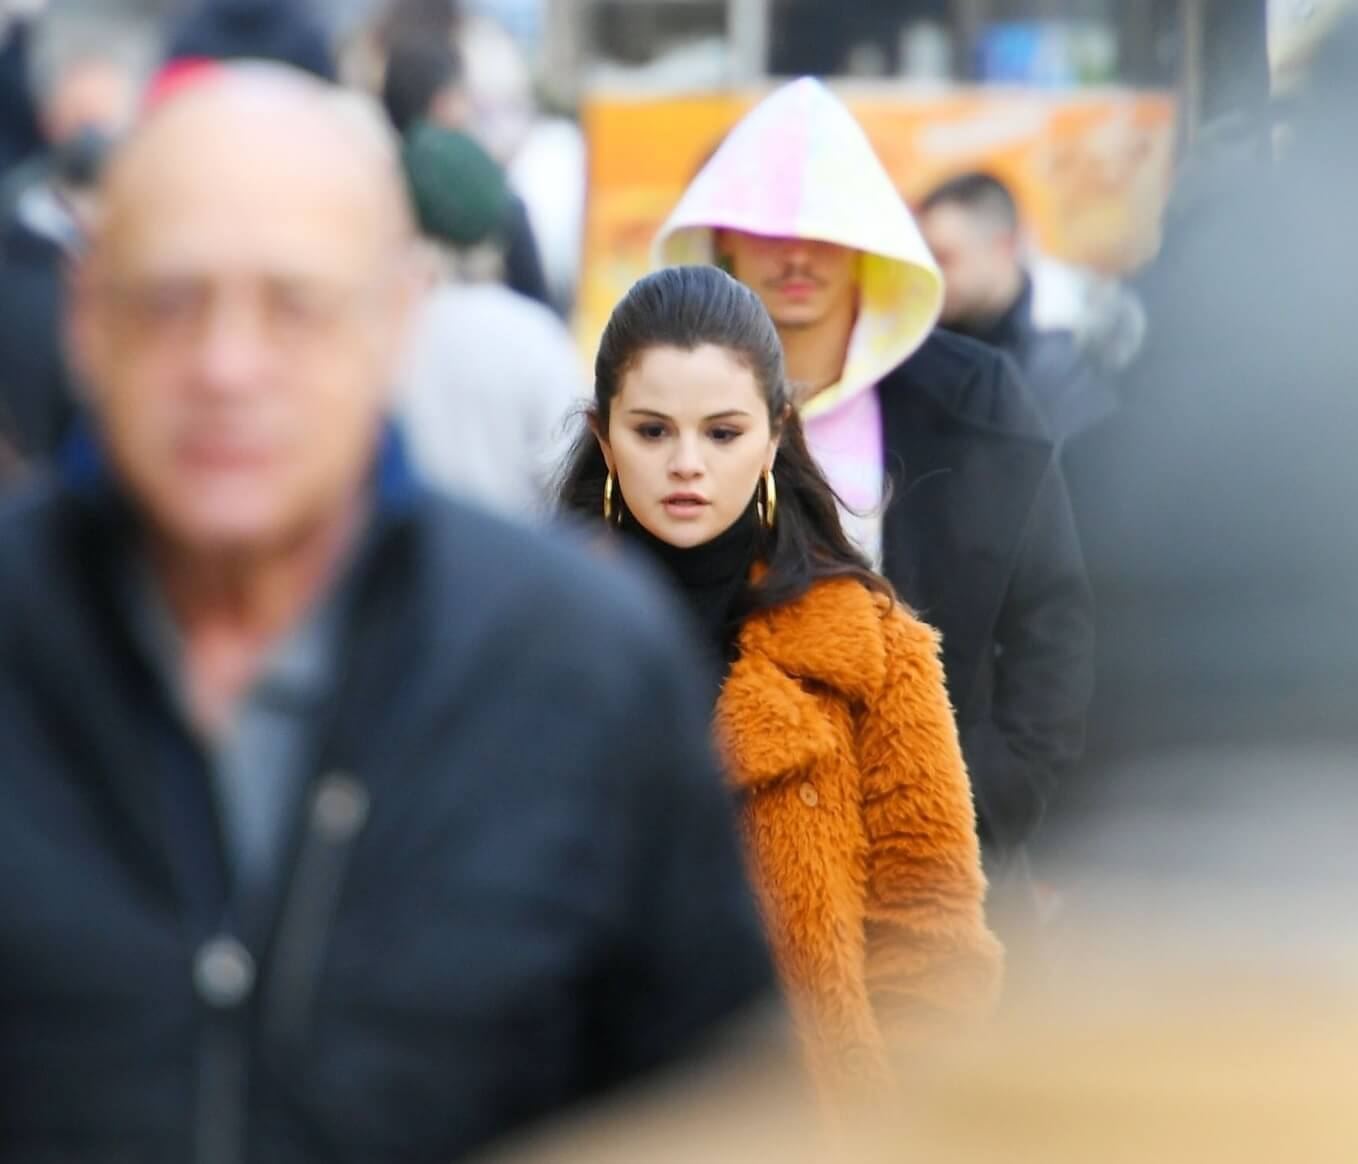 Selena Gomez filming in New York City February 24, 2021